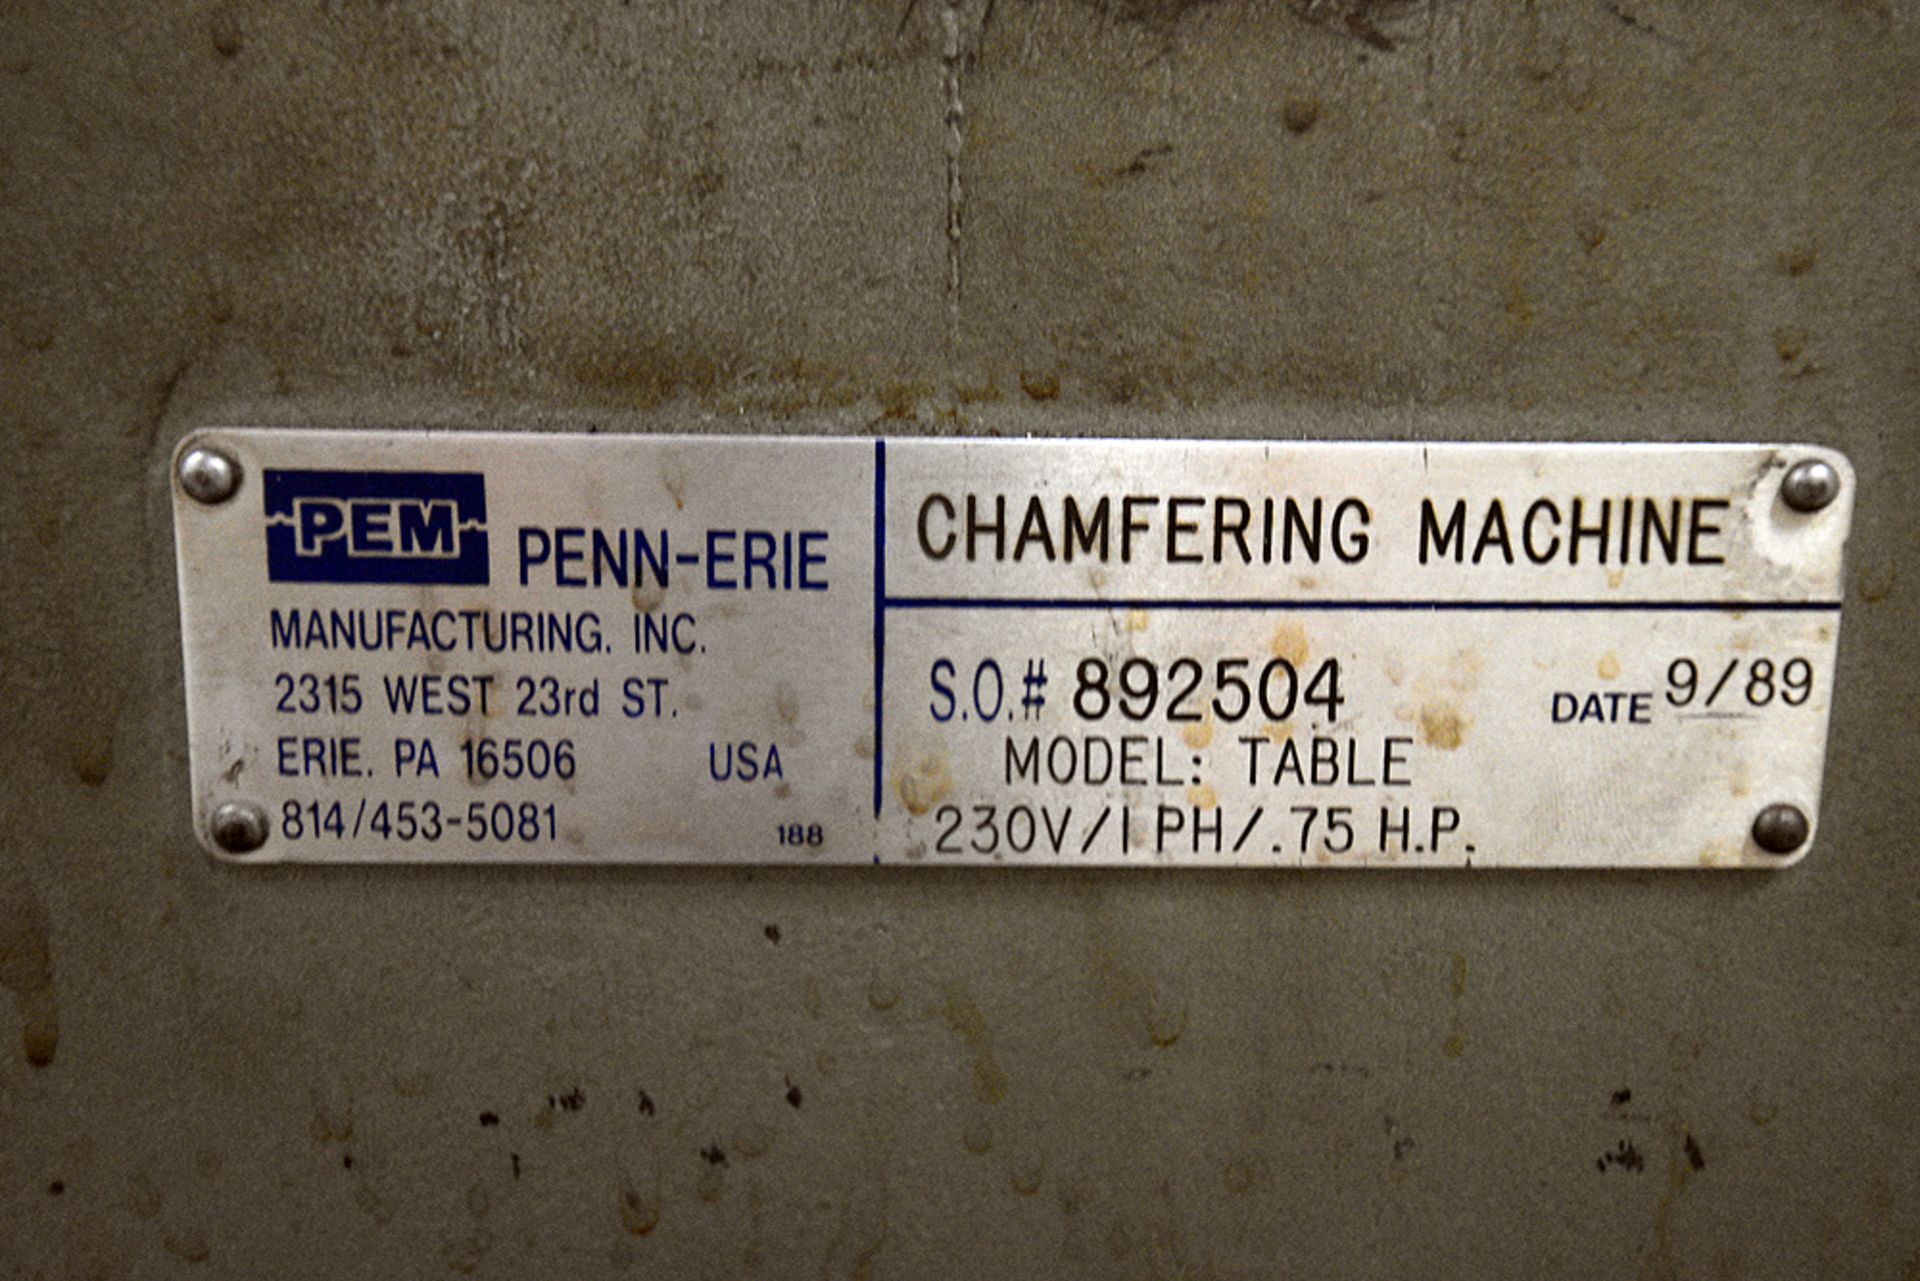 1989 Pem Penn-Erie Chamfering Machine w/3-Teir Metal Push Cart - Image 7 of 7